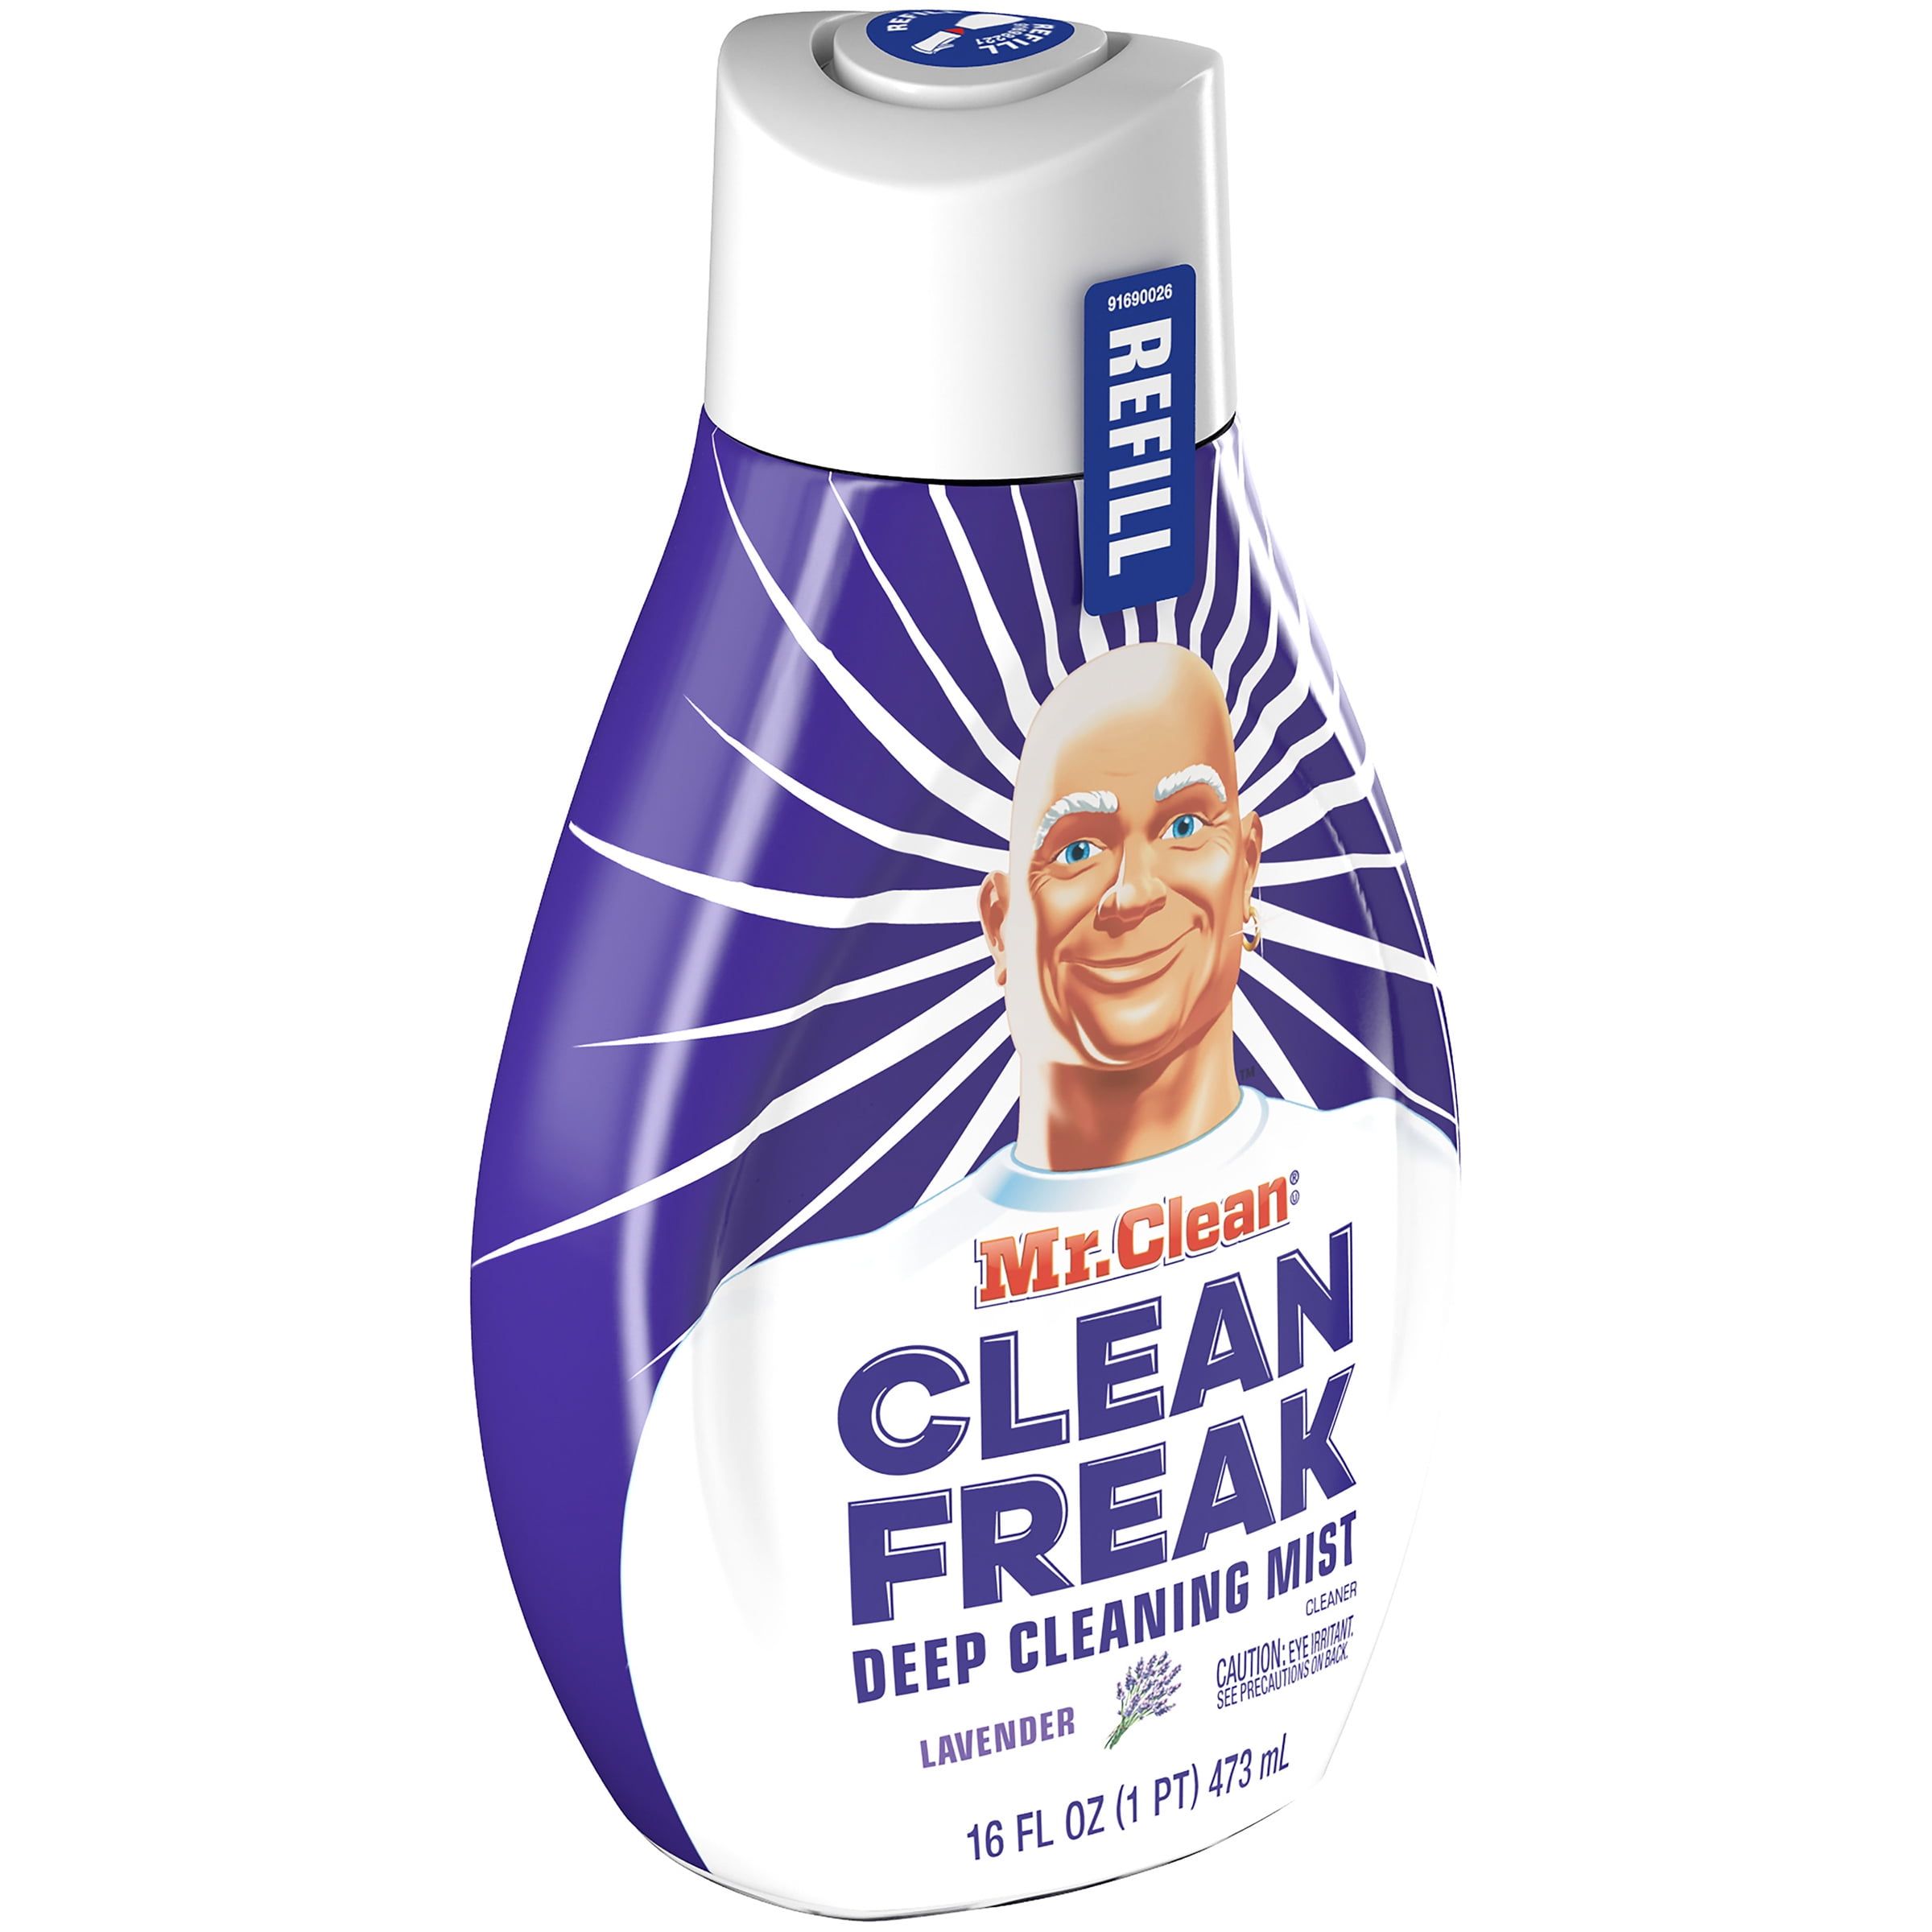  Mr. Clean All Purpose Cleaner, Clean Freak Mist for Bathroom &  Kitchen Cleaner, Lavender & Lemon Scent, 3 Count (16 fl oz each) : Health &  Household